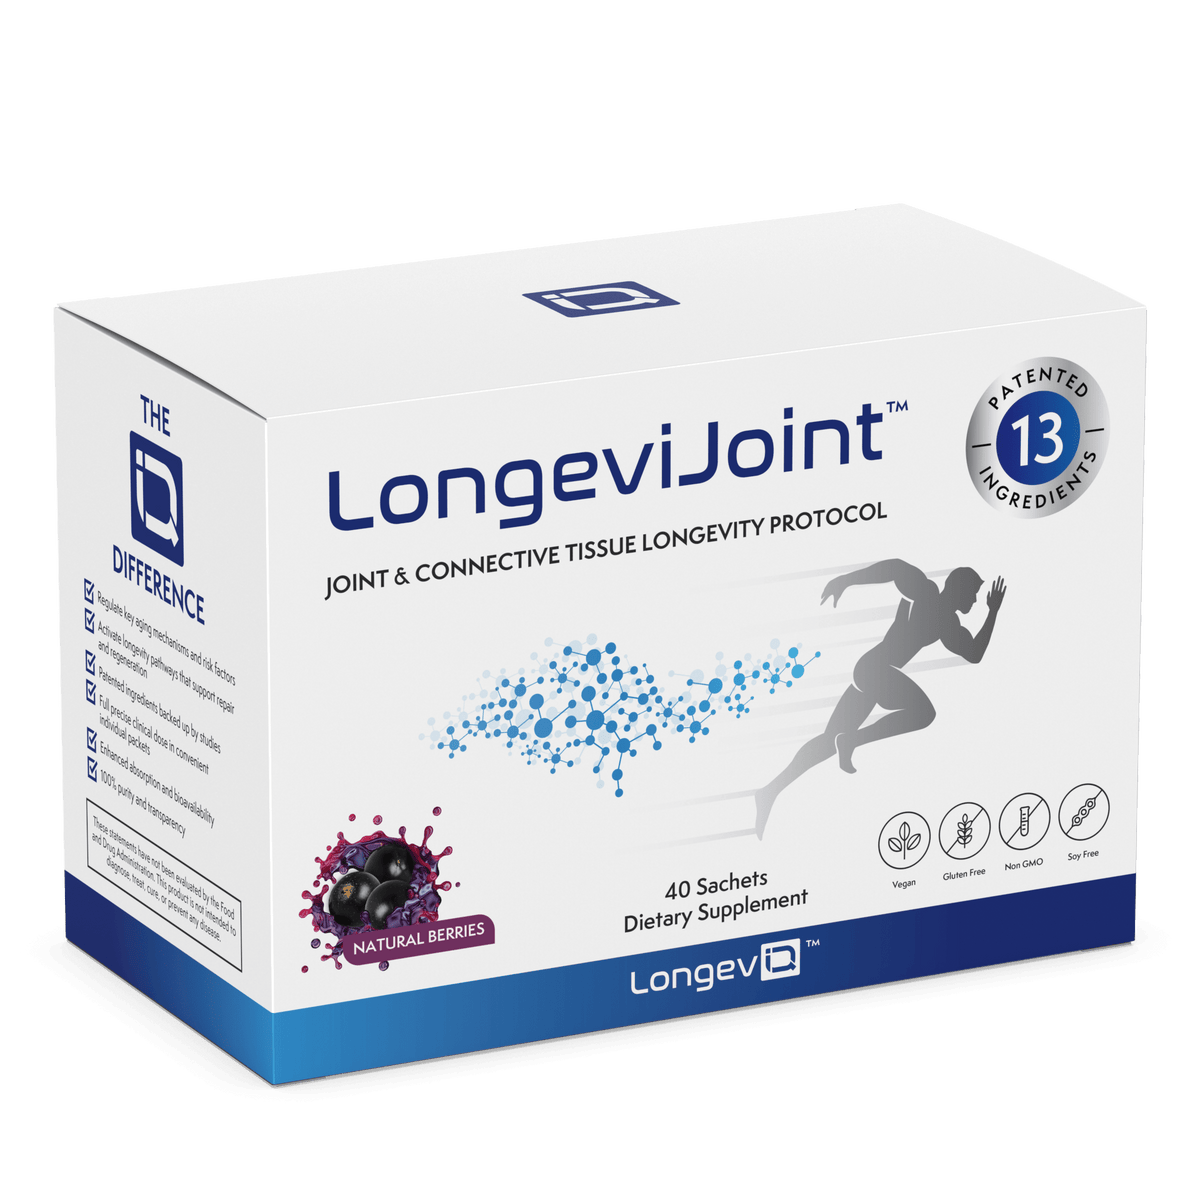 LONGEVIJOINT™ - JOINT & CONNECTIVE TISSUE LONGEVITY PROTOCOL